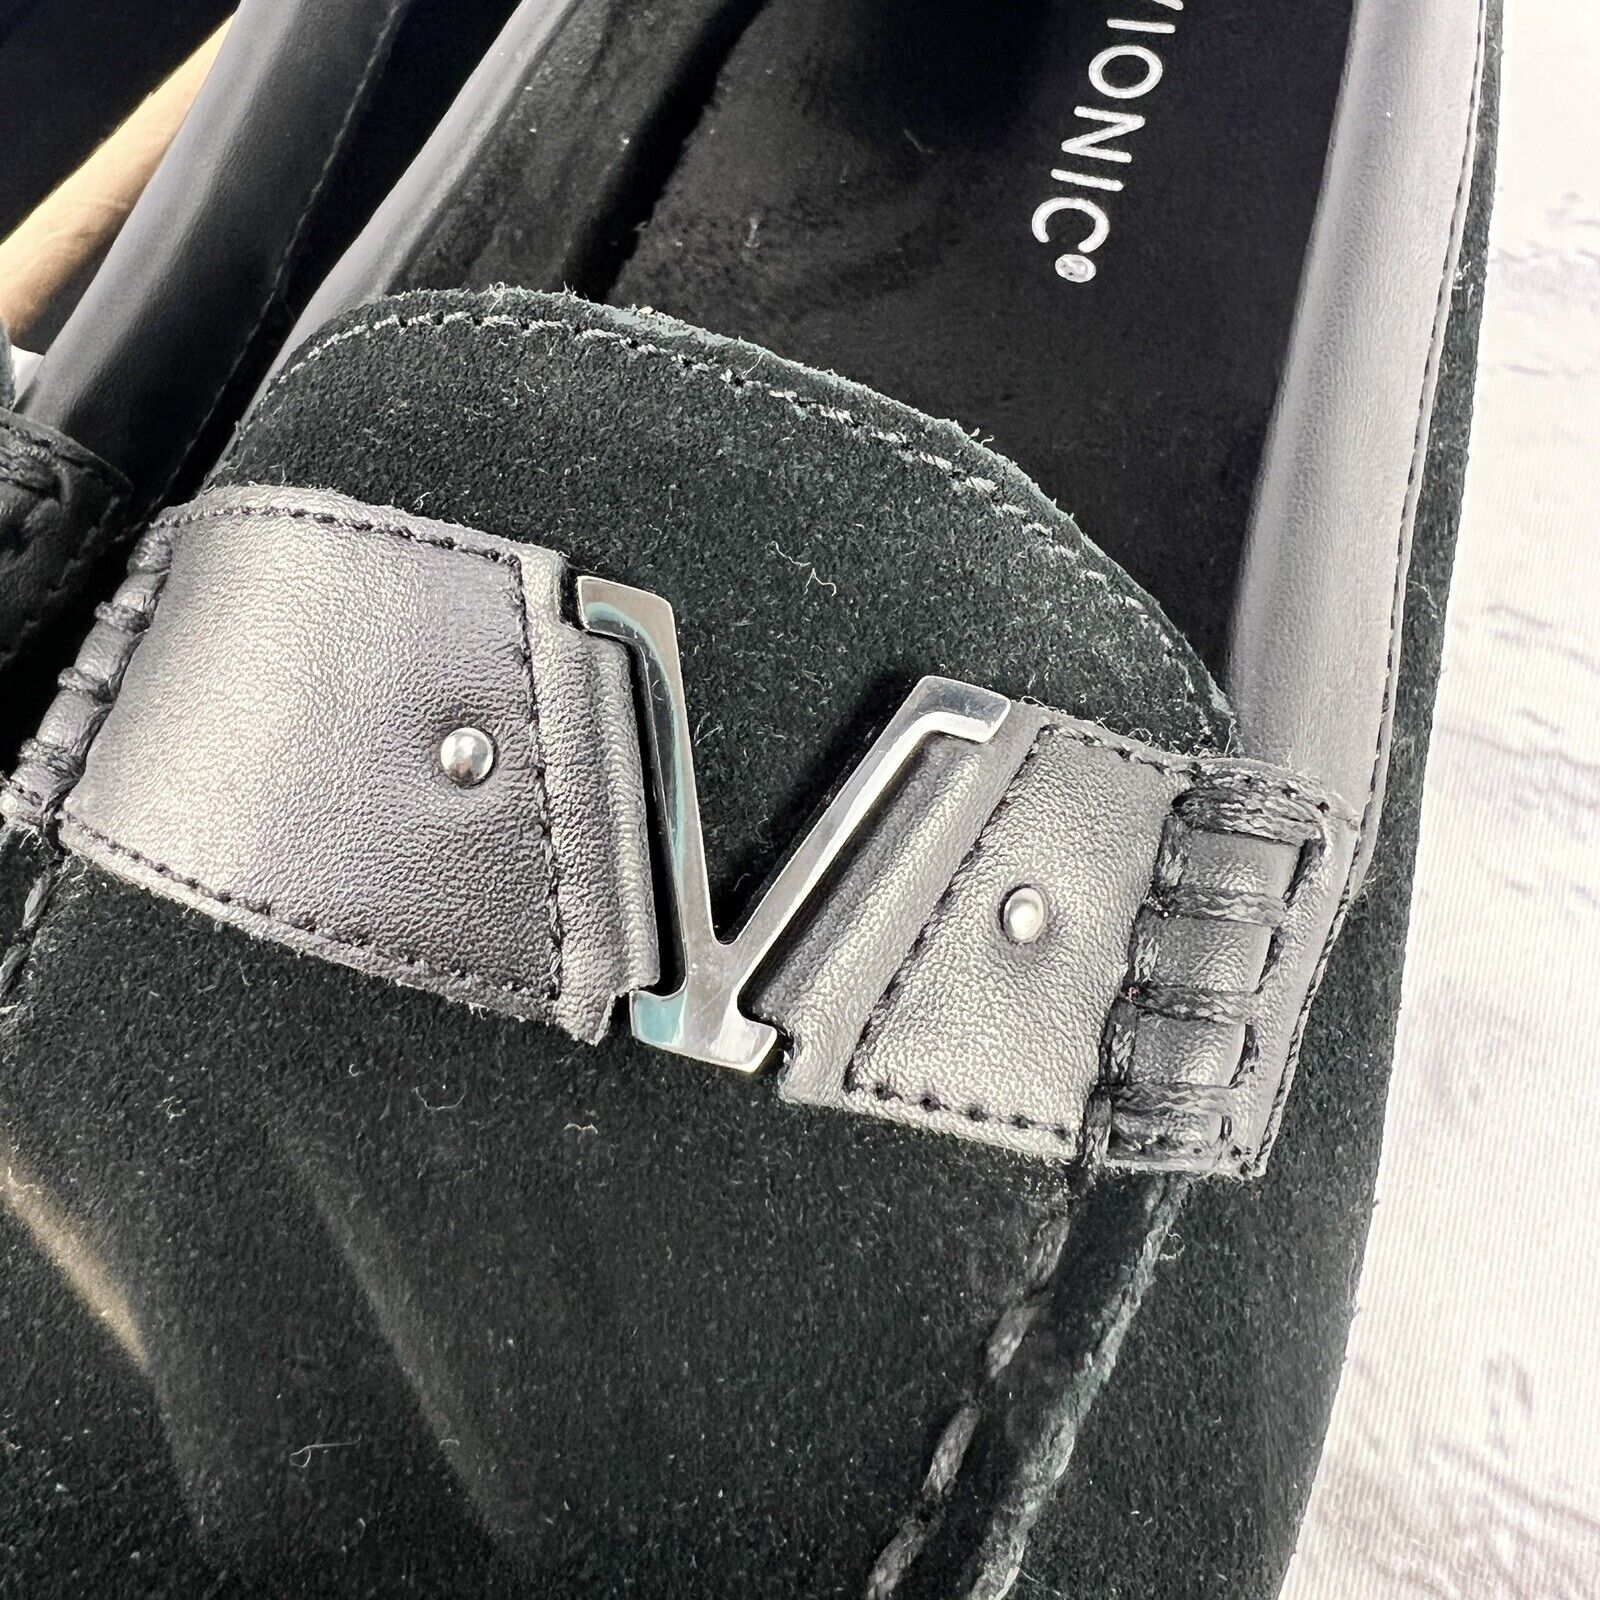 Vionic Honor Hilo Womens Size 9 Orthopedic Comfort Loafer Black Suede Flat Shoe